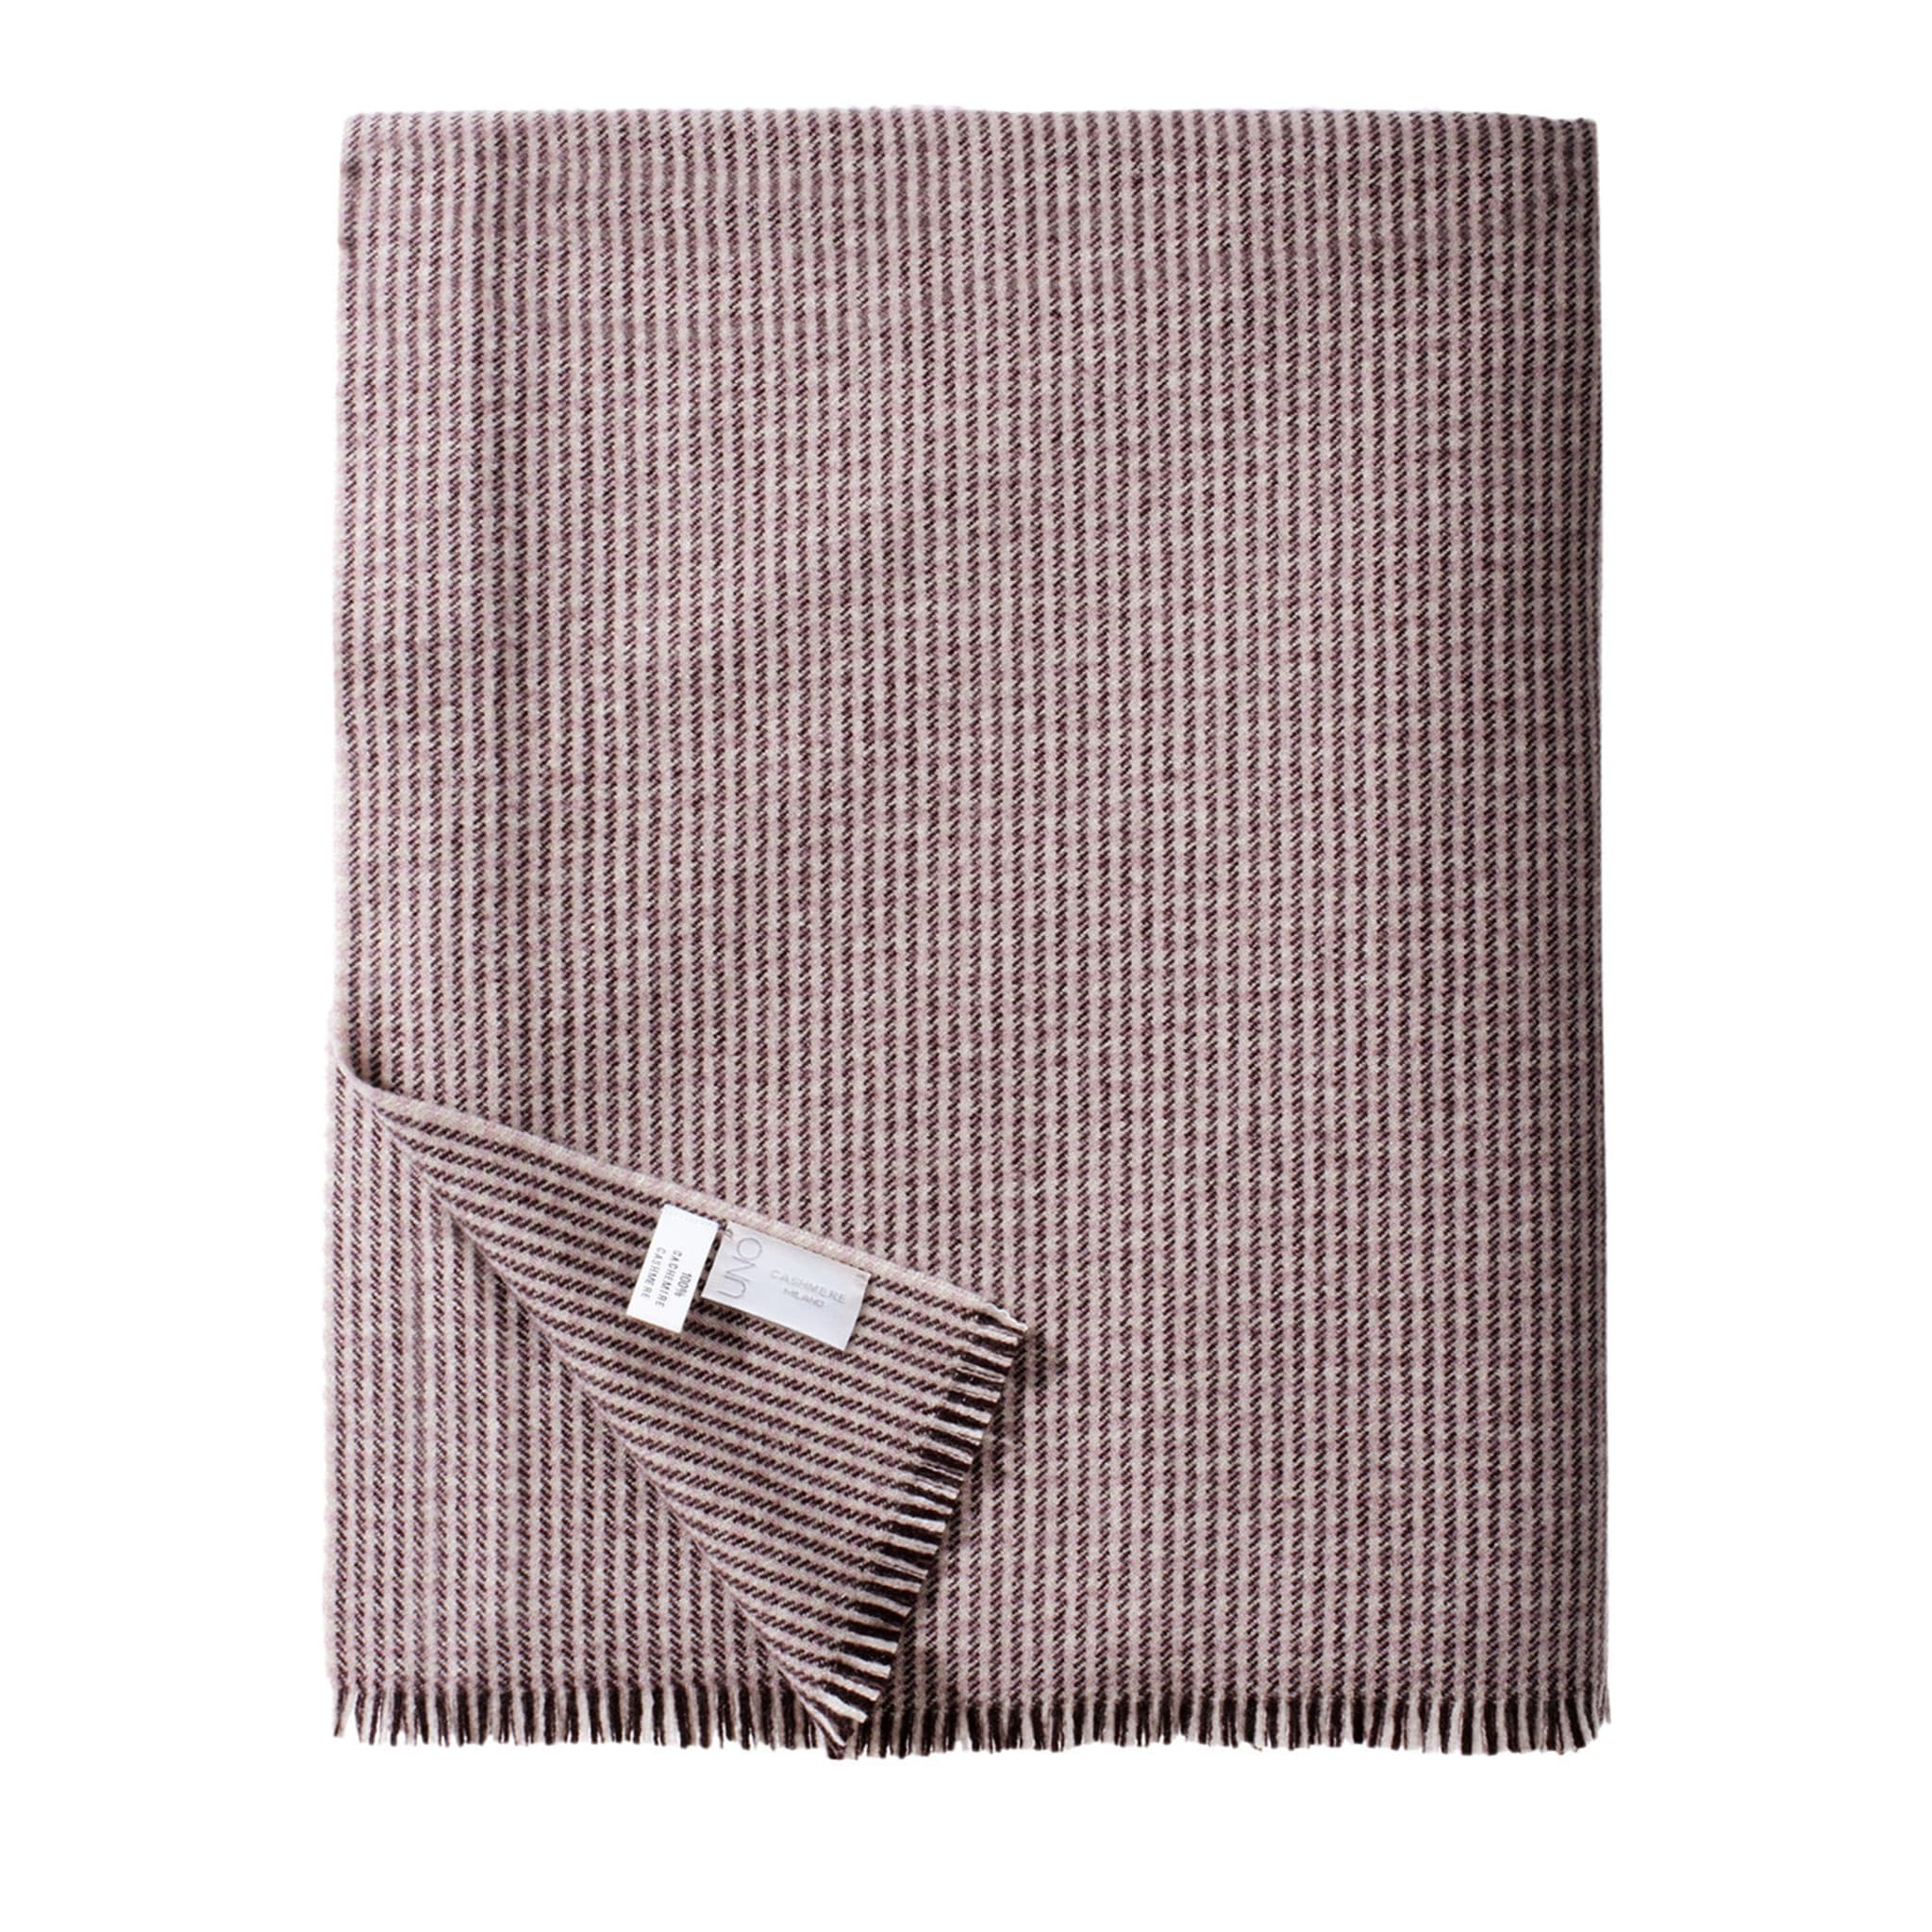 Medium Mauve Houndstooth Cashmere Blanket - Main view